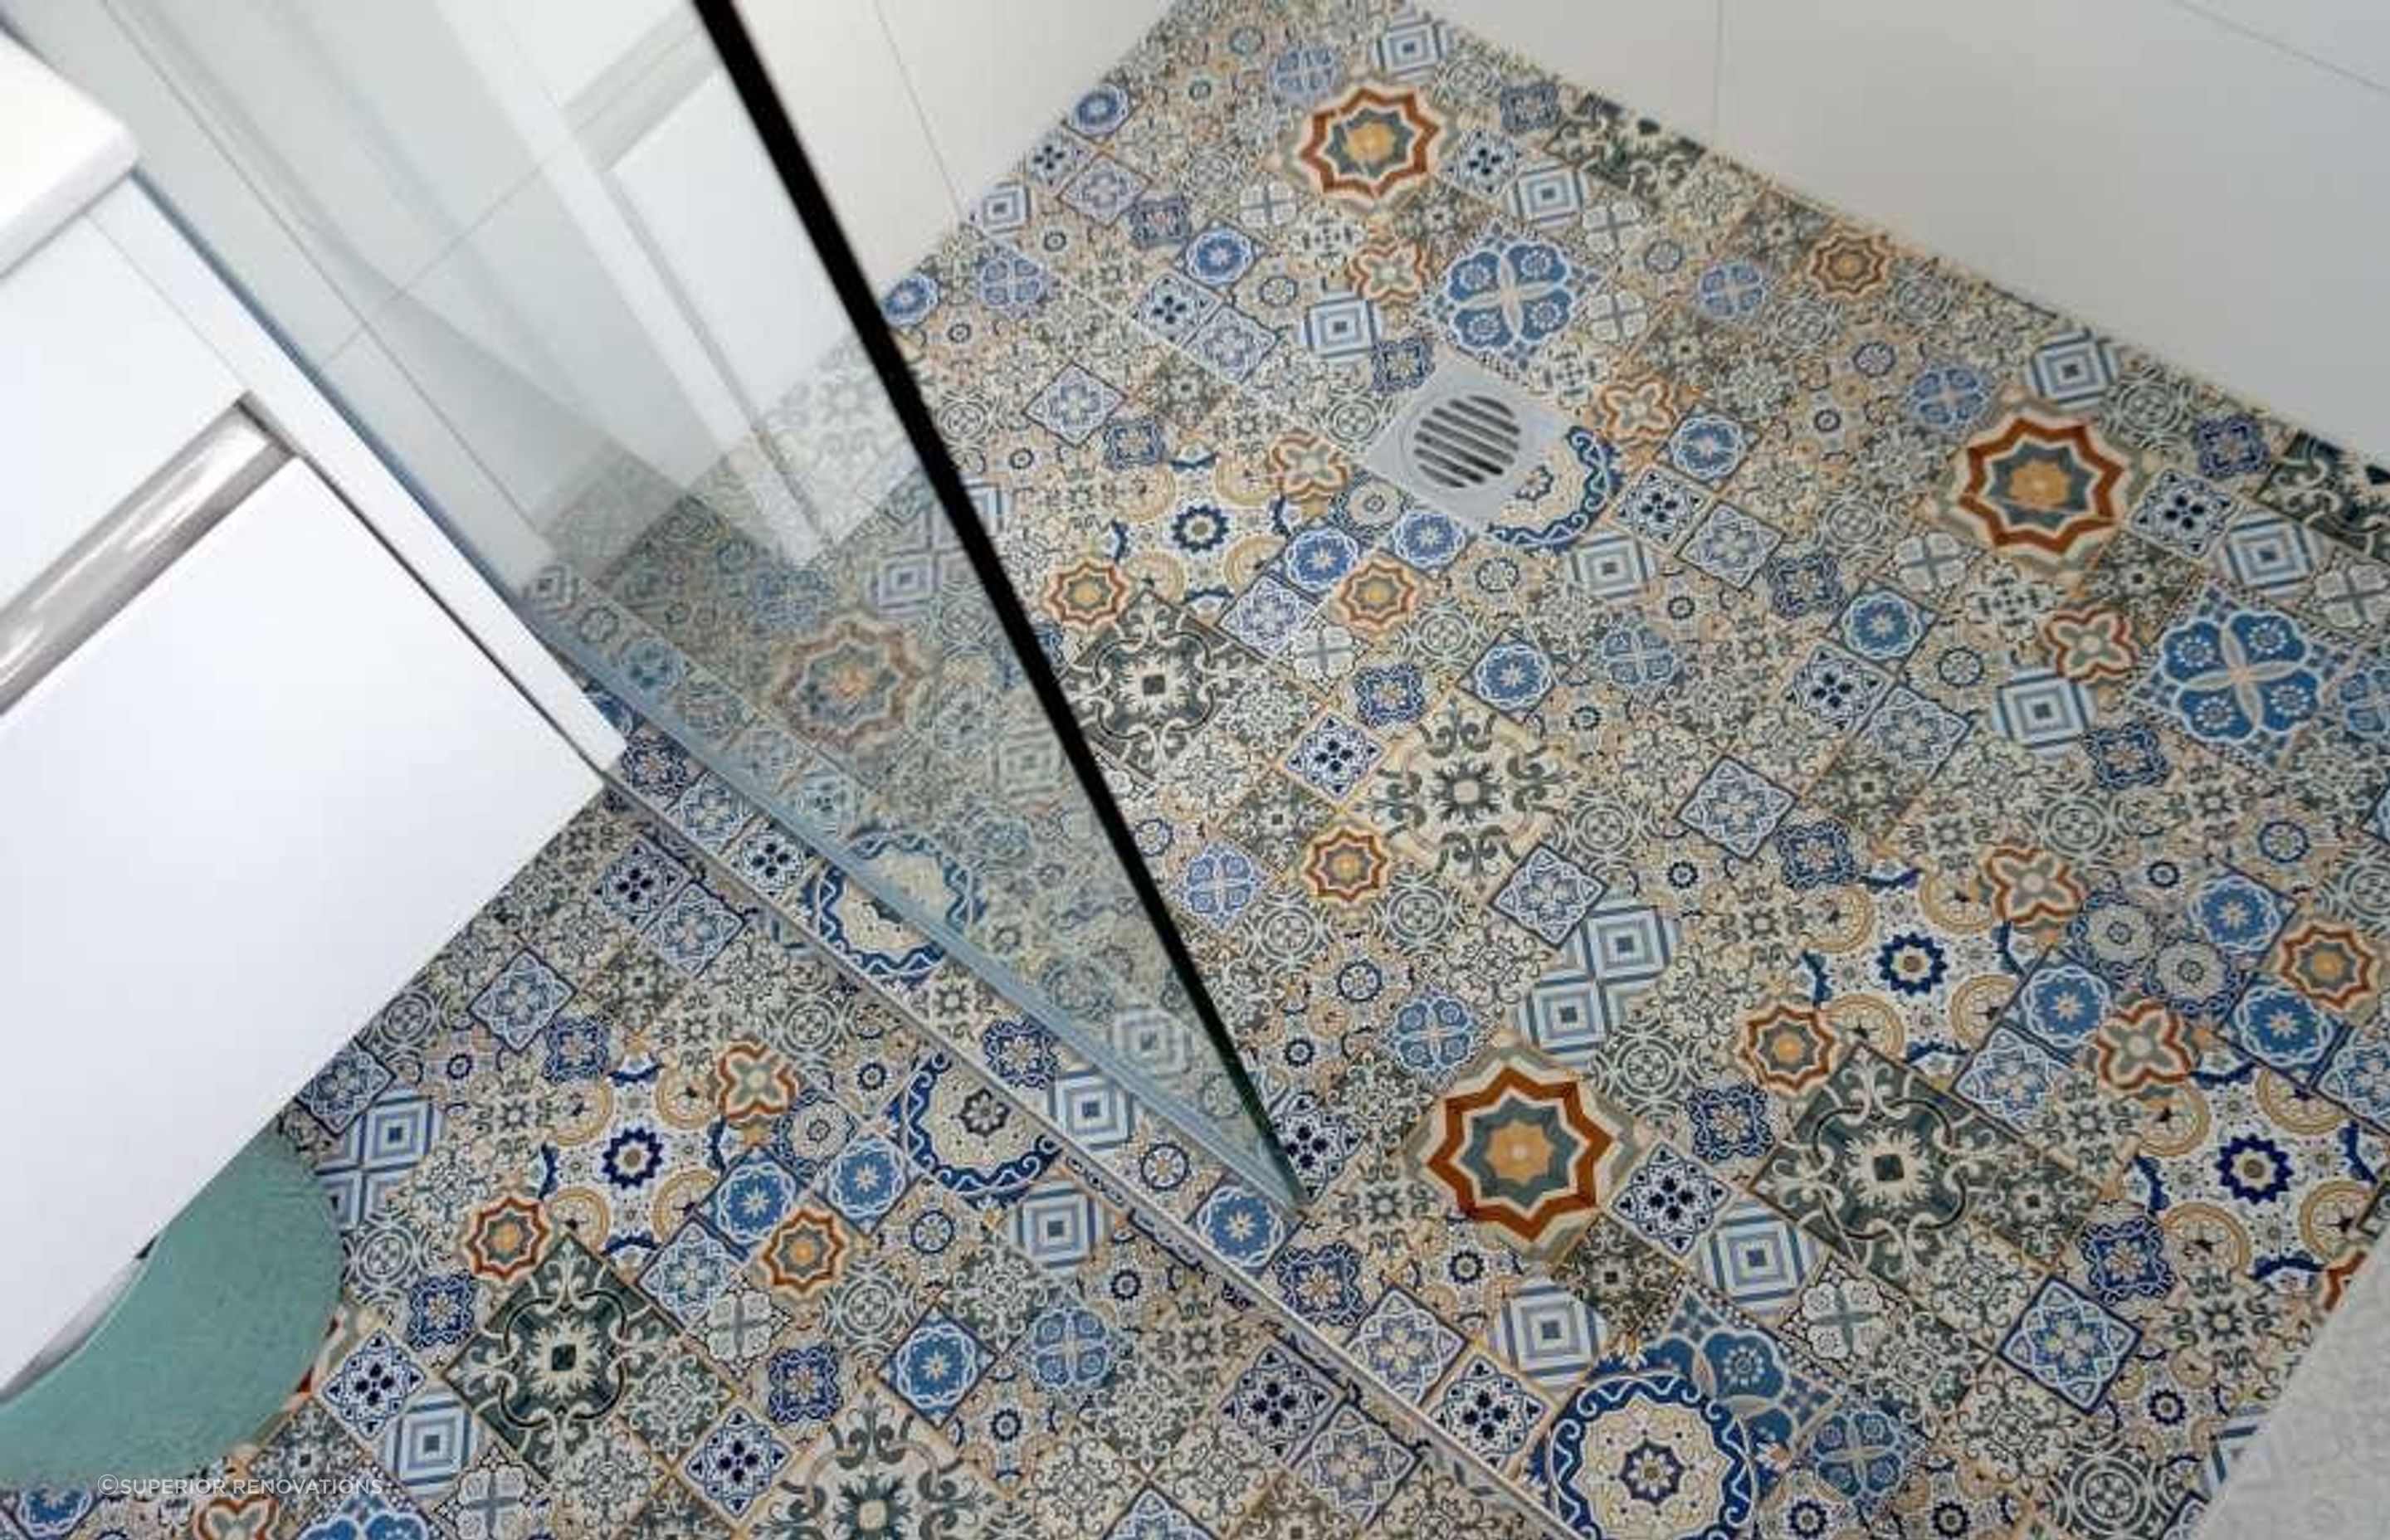 Mosaic tiles in Hillsborough